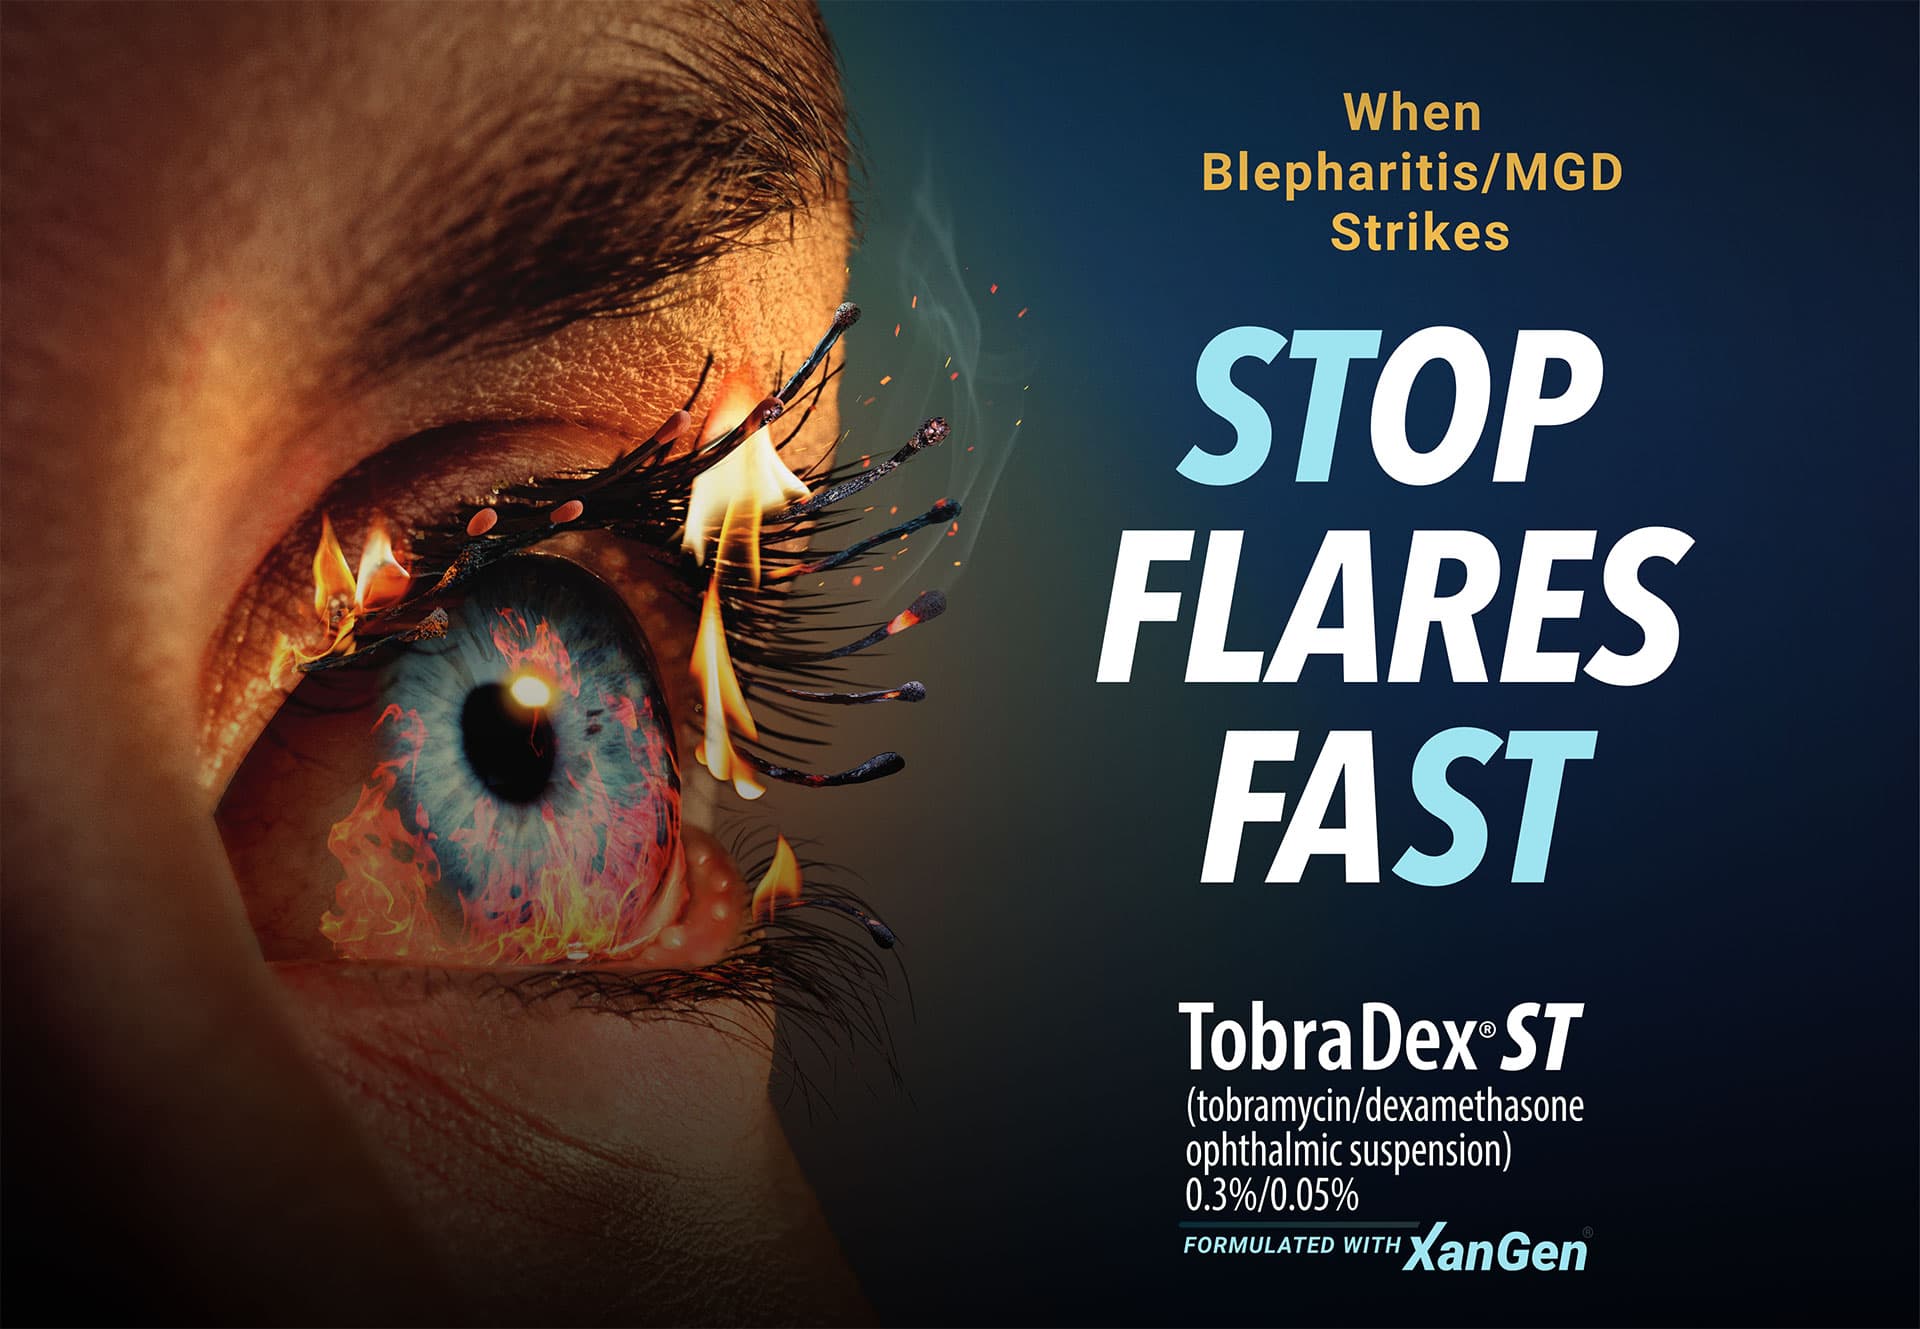 When blepharitis/MGD strikes stop flares fast TobradexST (tobramycin/dexamethasone ophthalmic suspension) 0.3%/0.05% formulated with XanGen